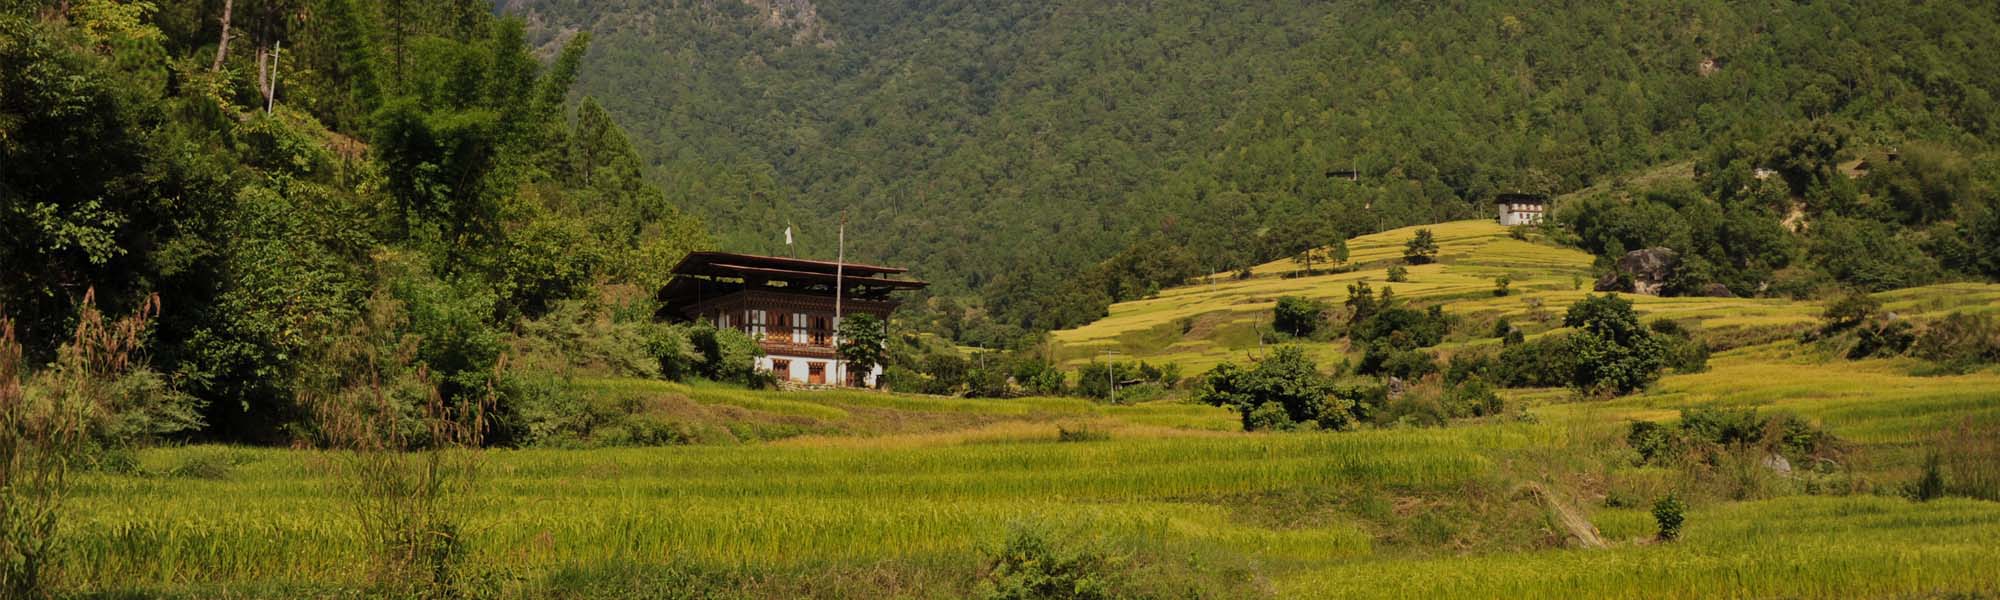 Sustainable Development Fees 50% discounts in Bhutan